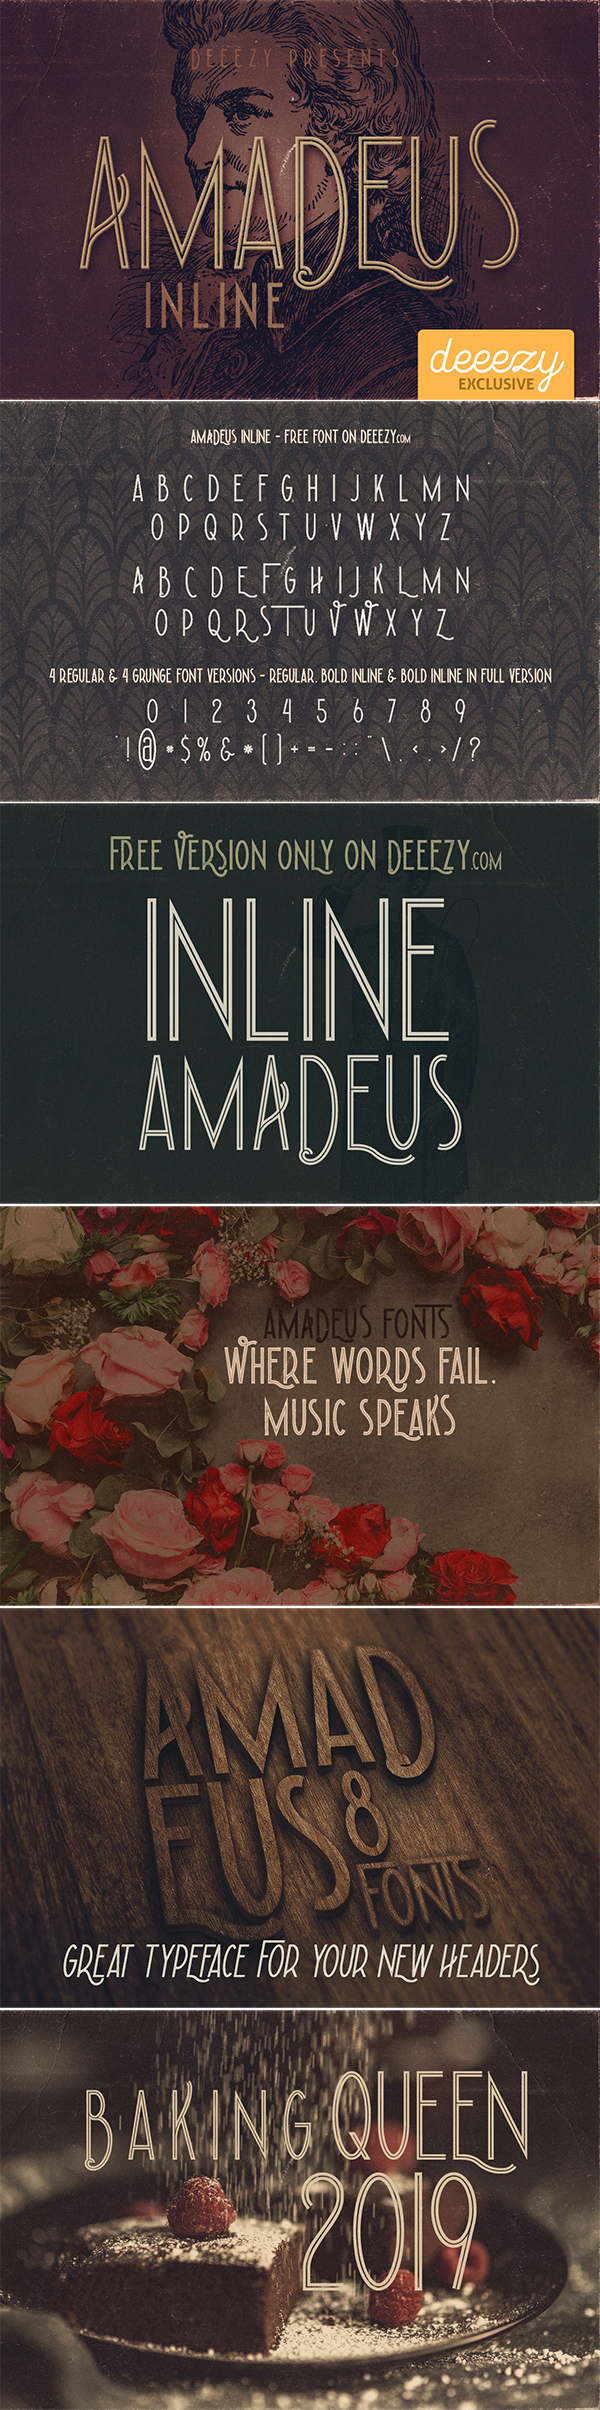 Amadeus Inline Free Font